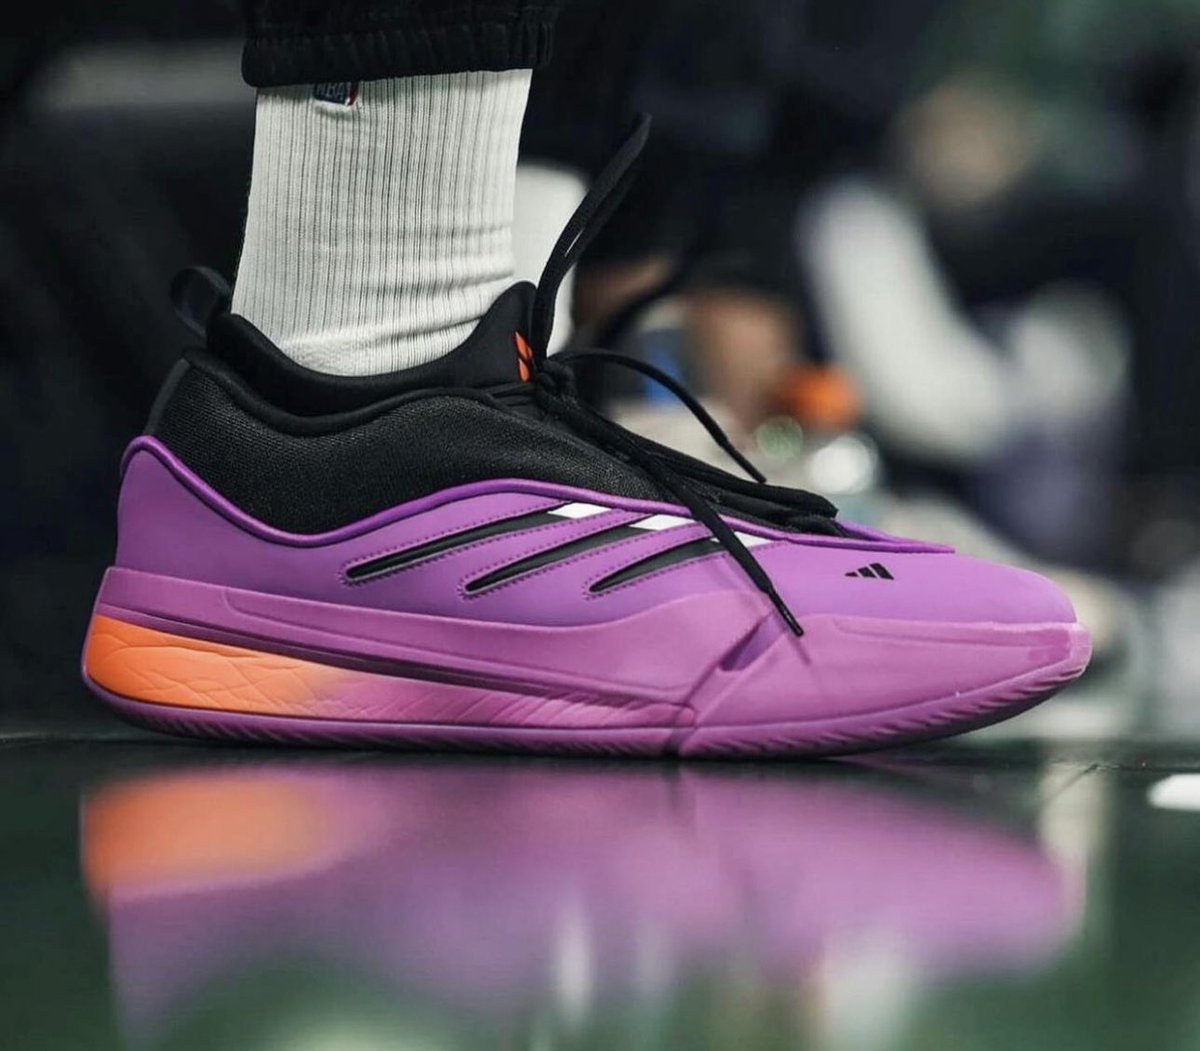 Damian Lillard debuts the Adidas Dame 9 to kick off the NBA Playoffs